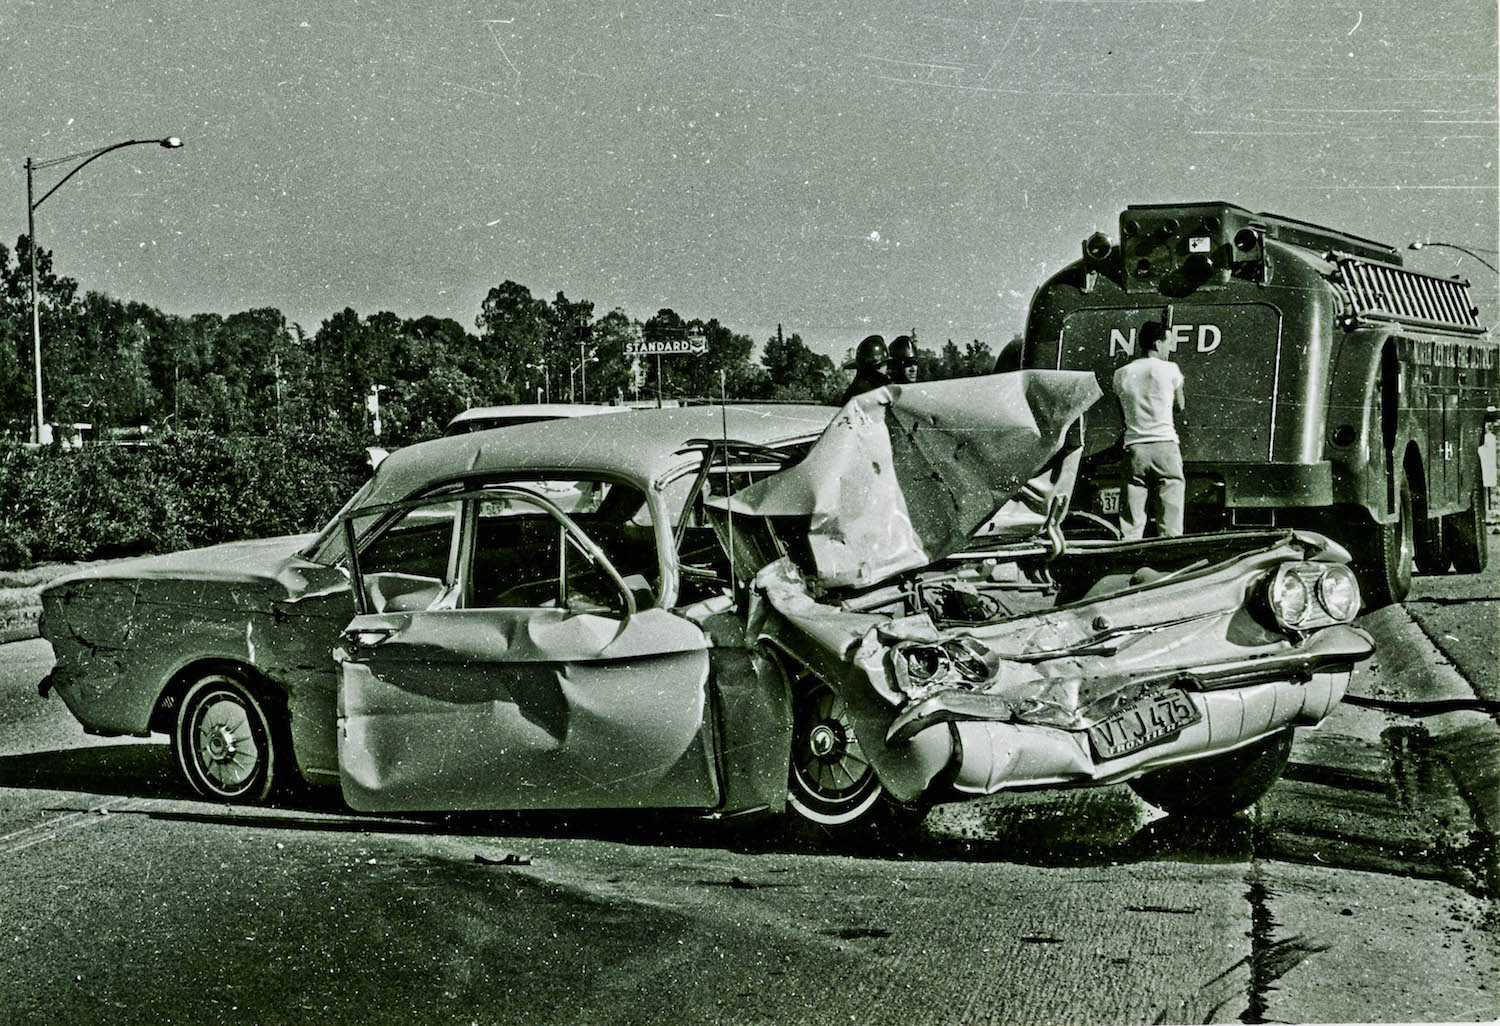 Old Auto Accidents in Fresno (1960 - 1966) - Flashbak